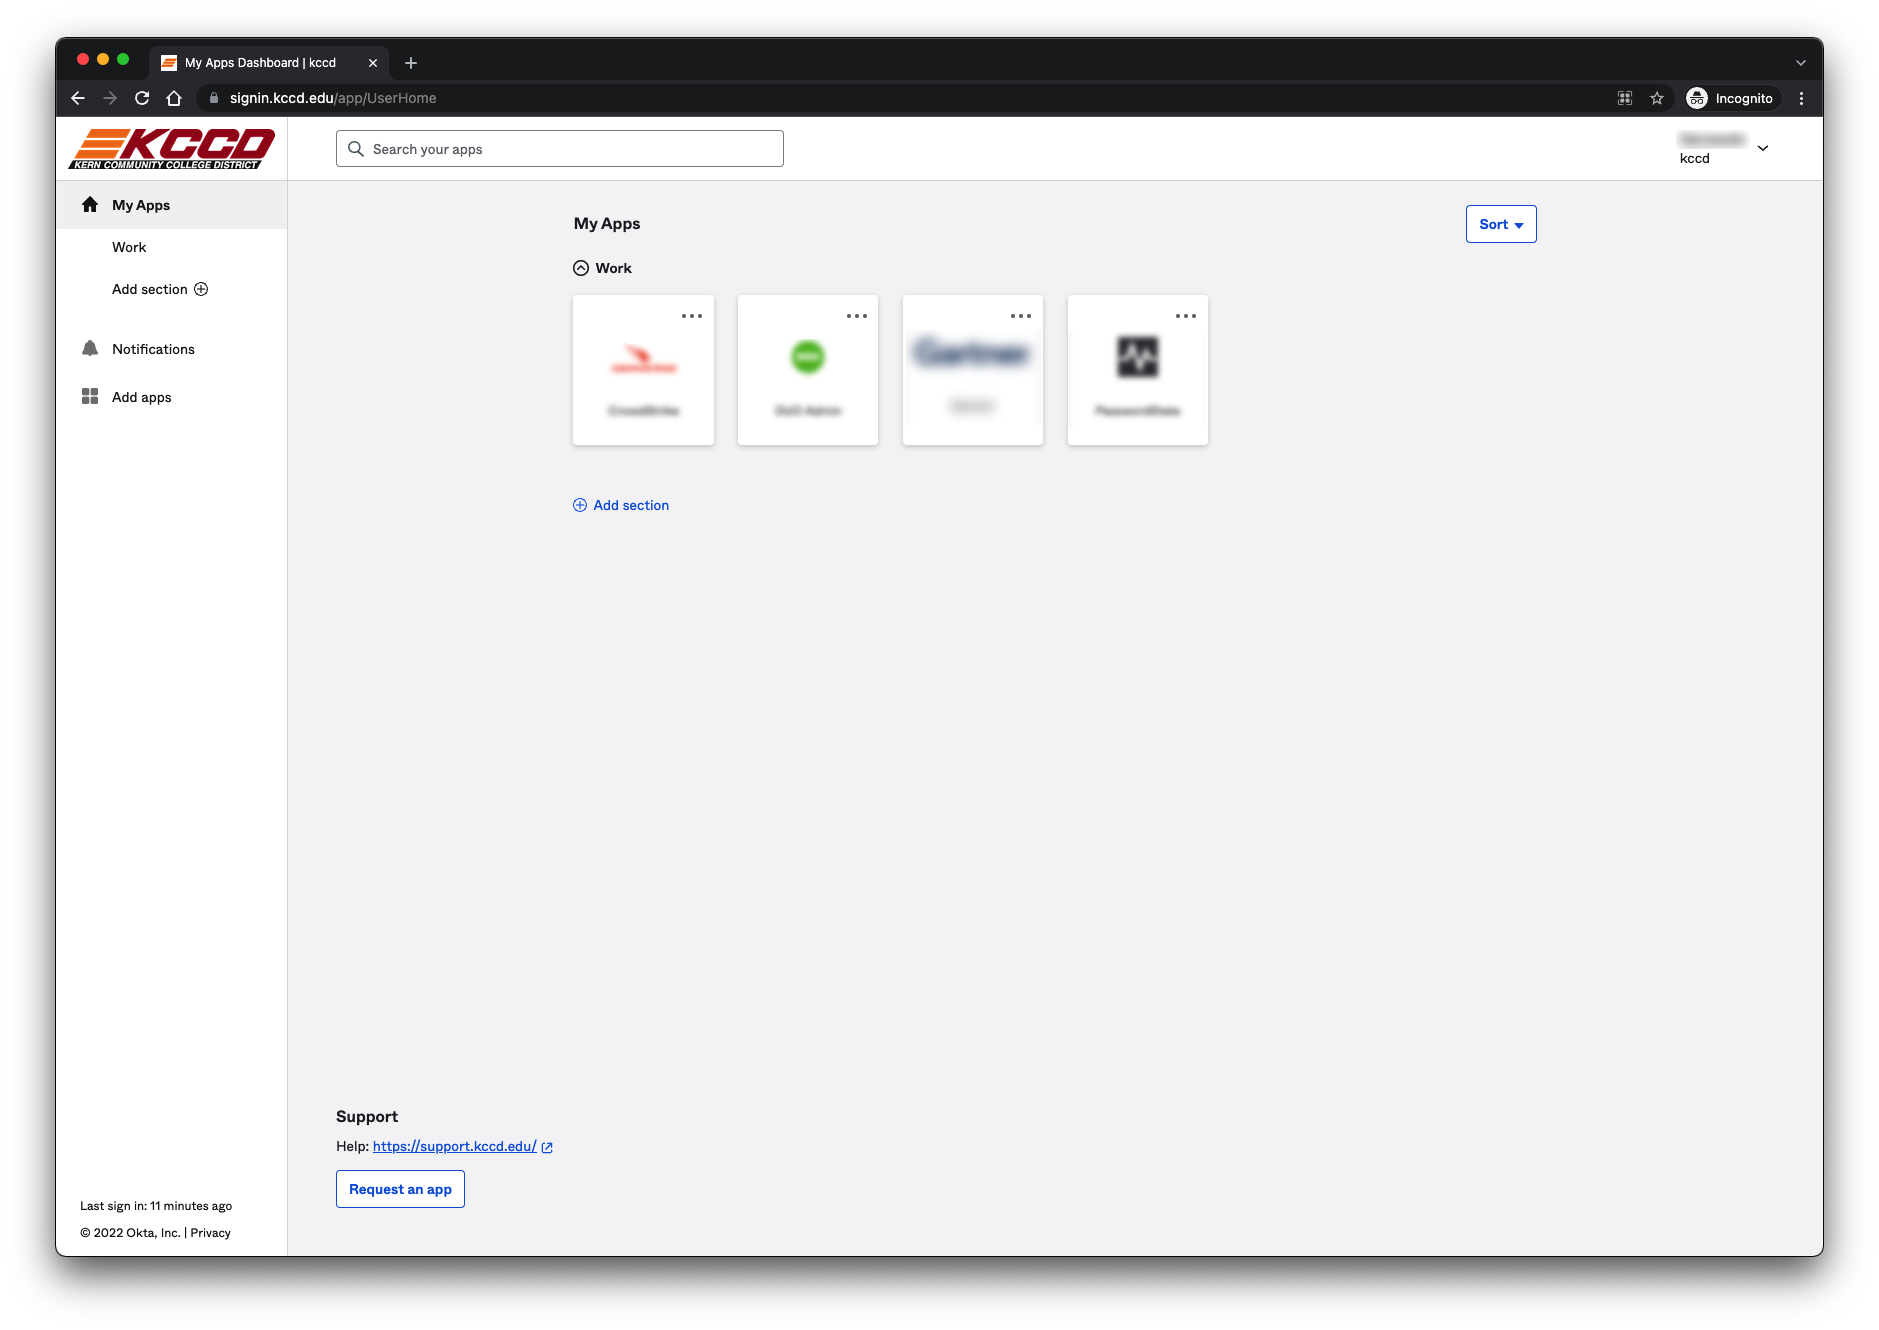 Image of 'My Apps' dashboard inside of Okta